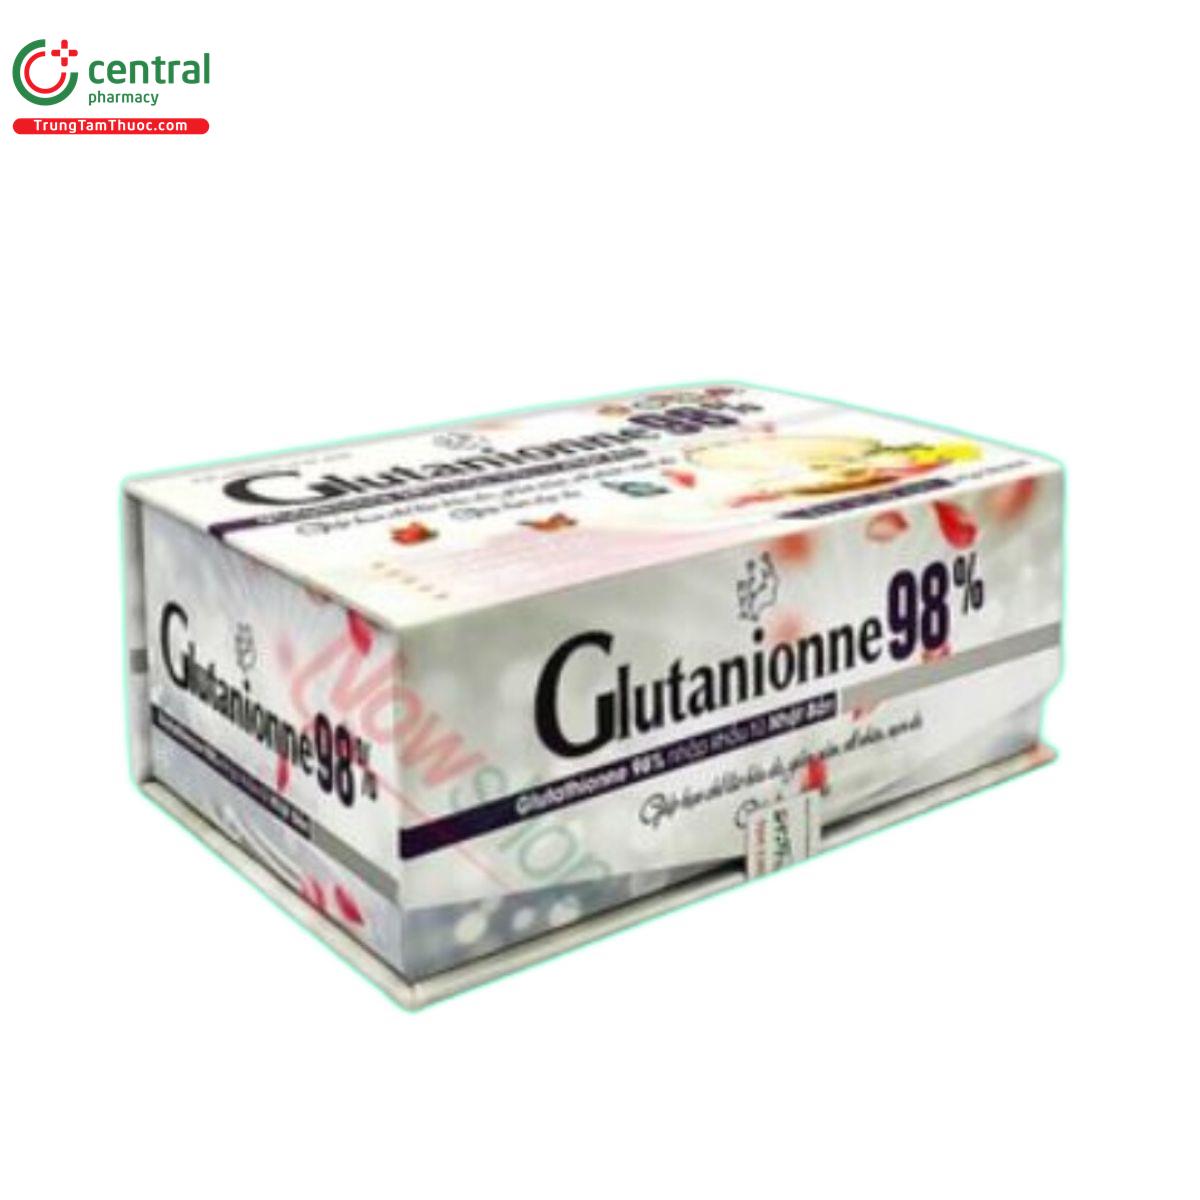 glutanionne 98 5 C1834